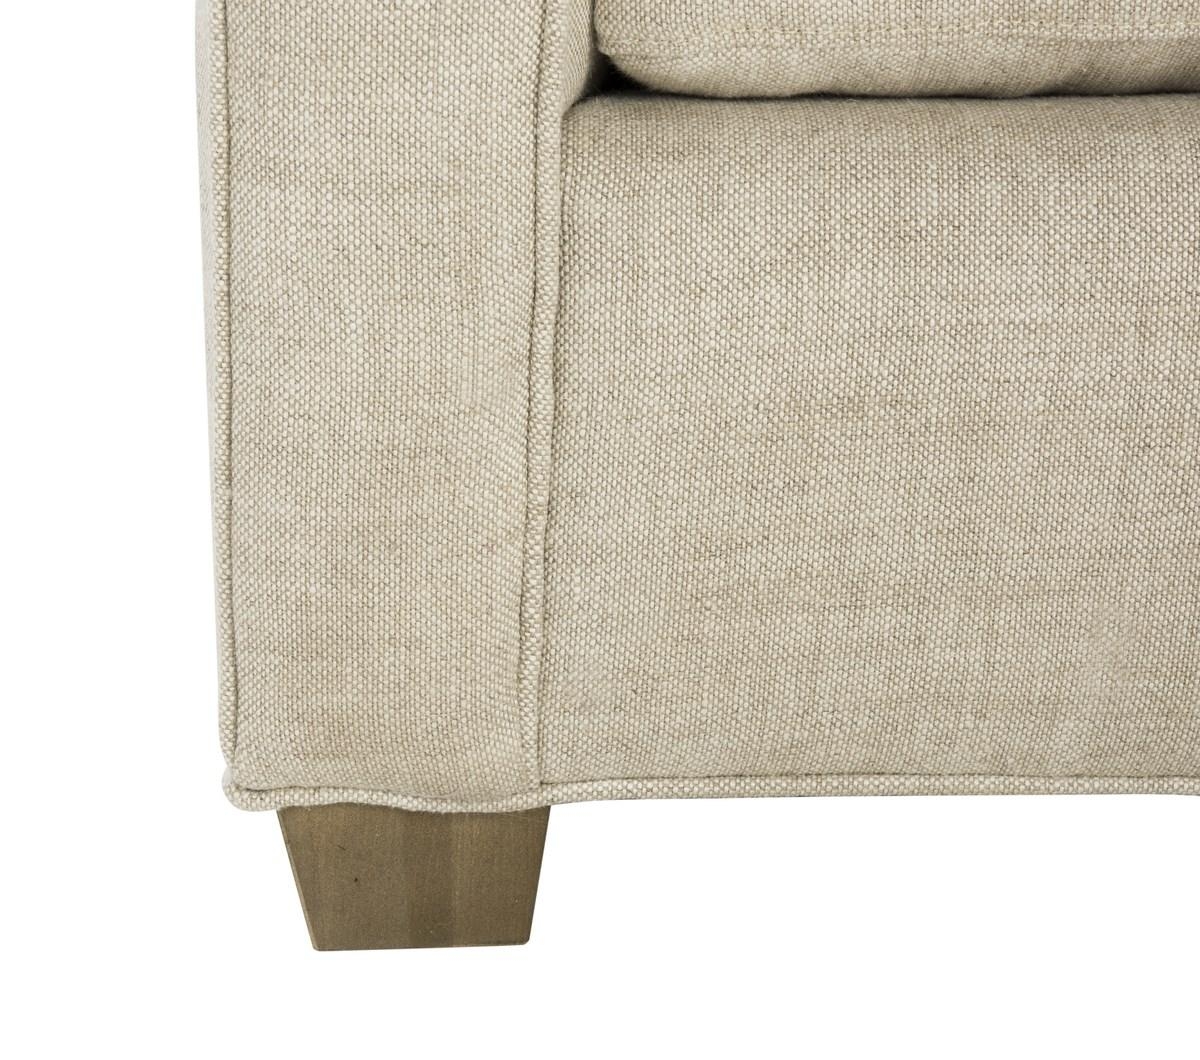 Frasier Linen Sofa - Natural - Arlo Home - Image 5